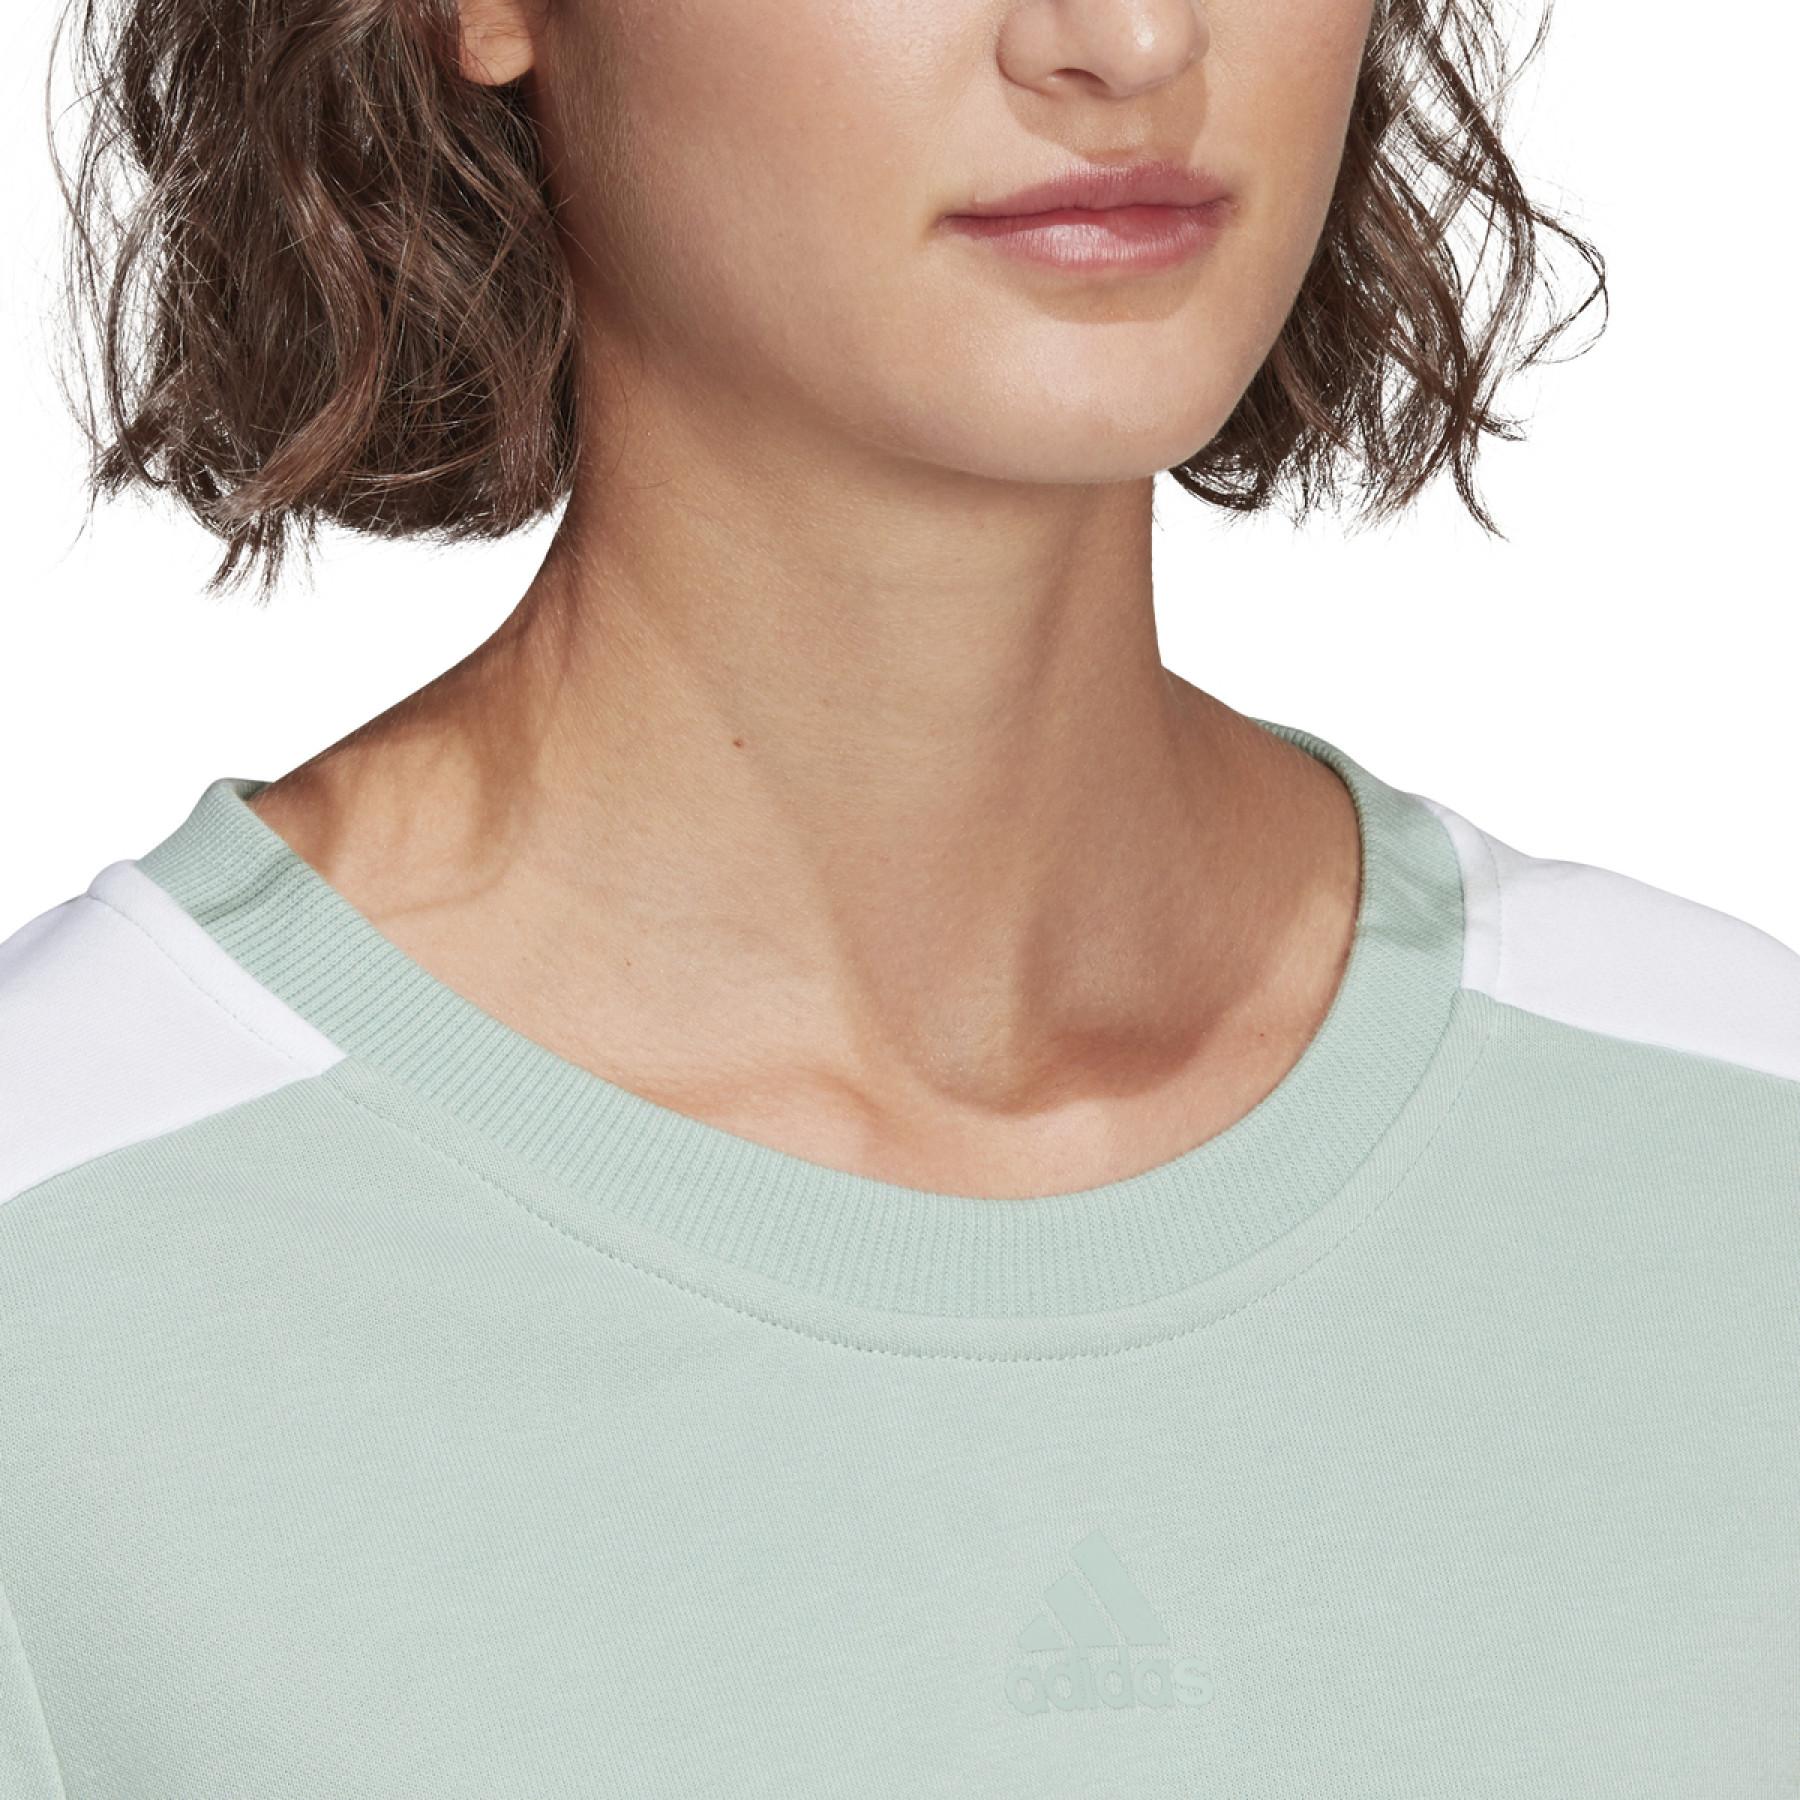 Damen-Sweatshirt adidas Essentials Logo Colorblock